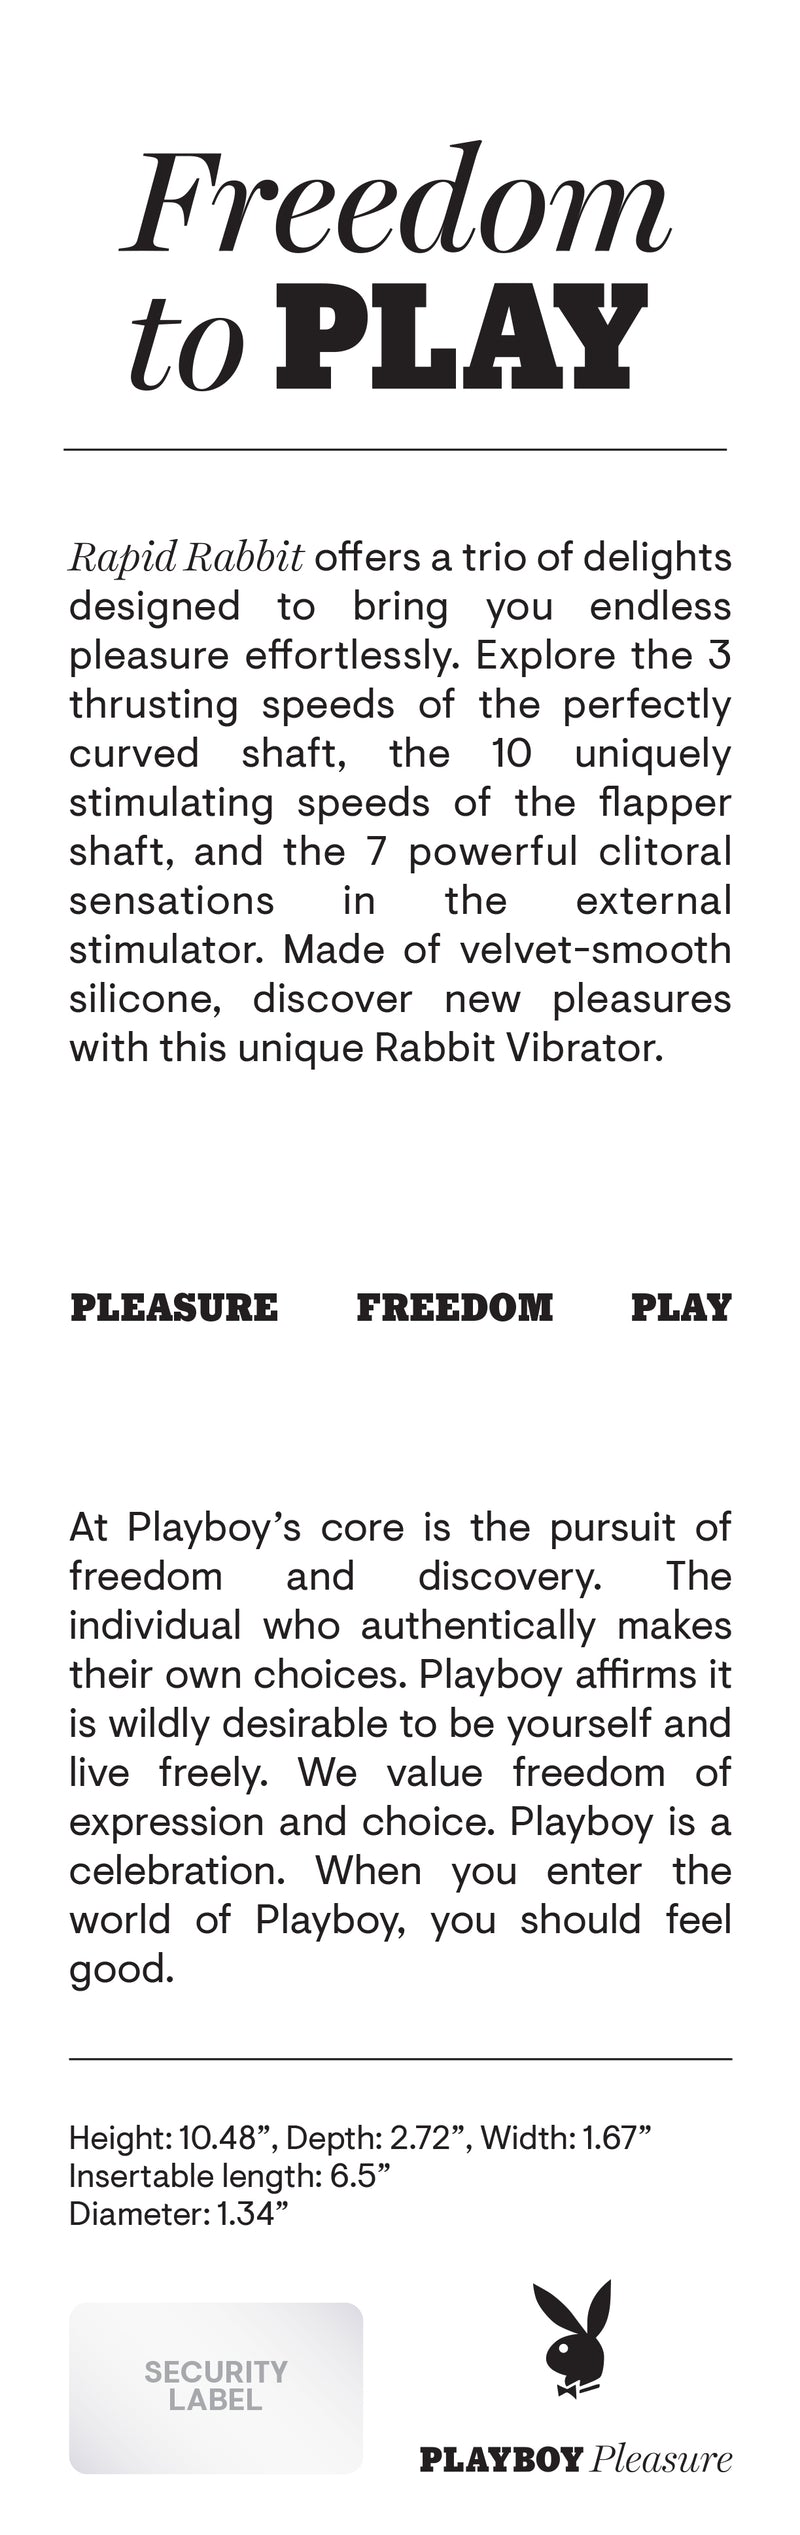 Rapid Rabbit - Playboy Pleasure